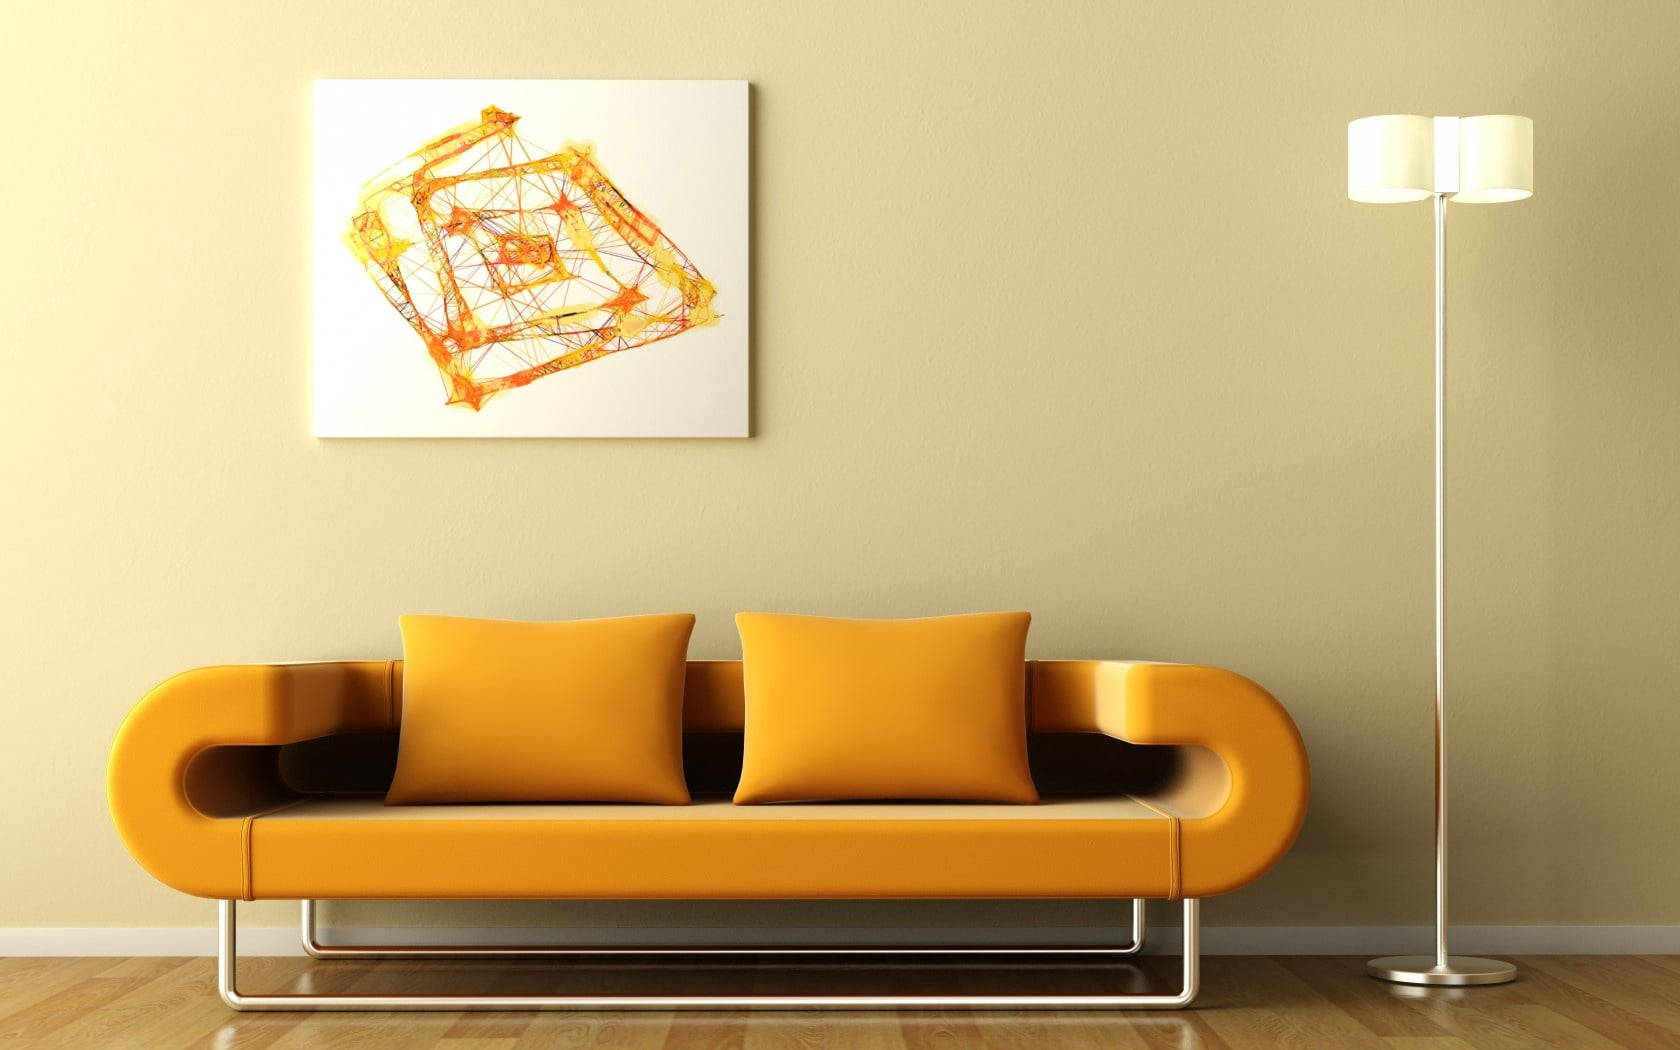 Elegant Aesthetic Abode - A cozy corner encapsulating simplicity, elegance, and warmth. Wallpaper